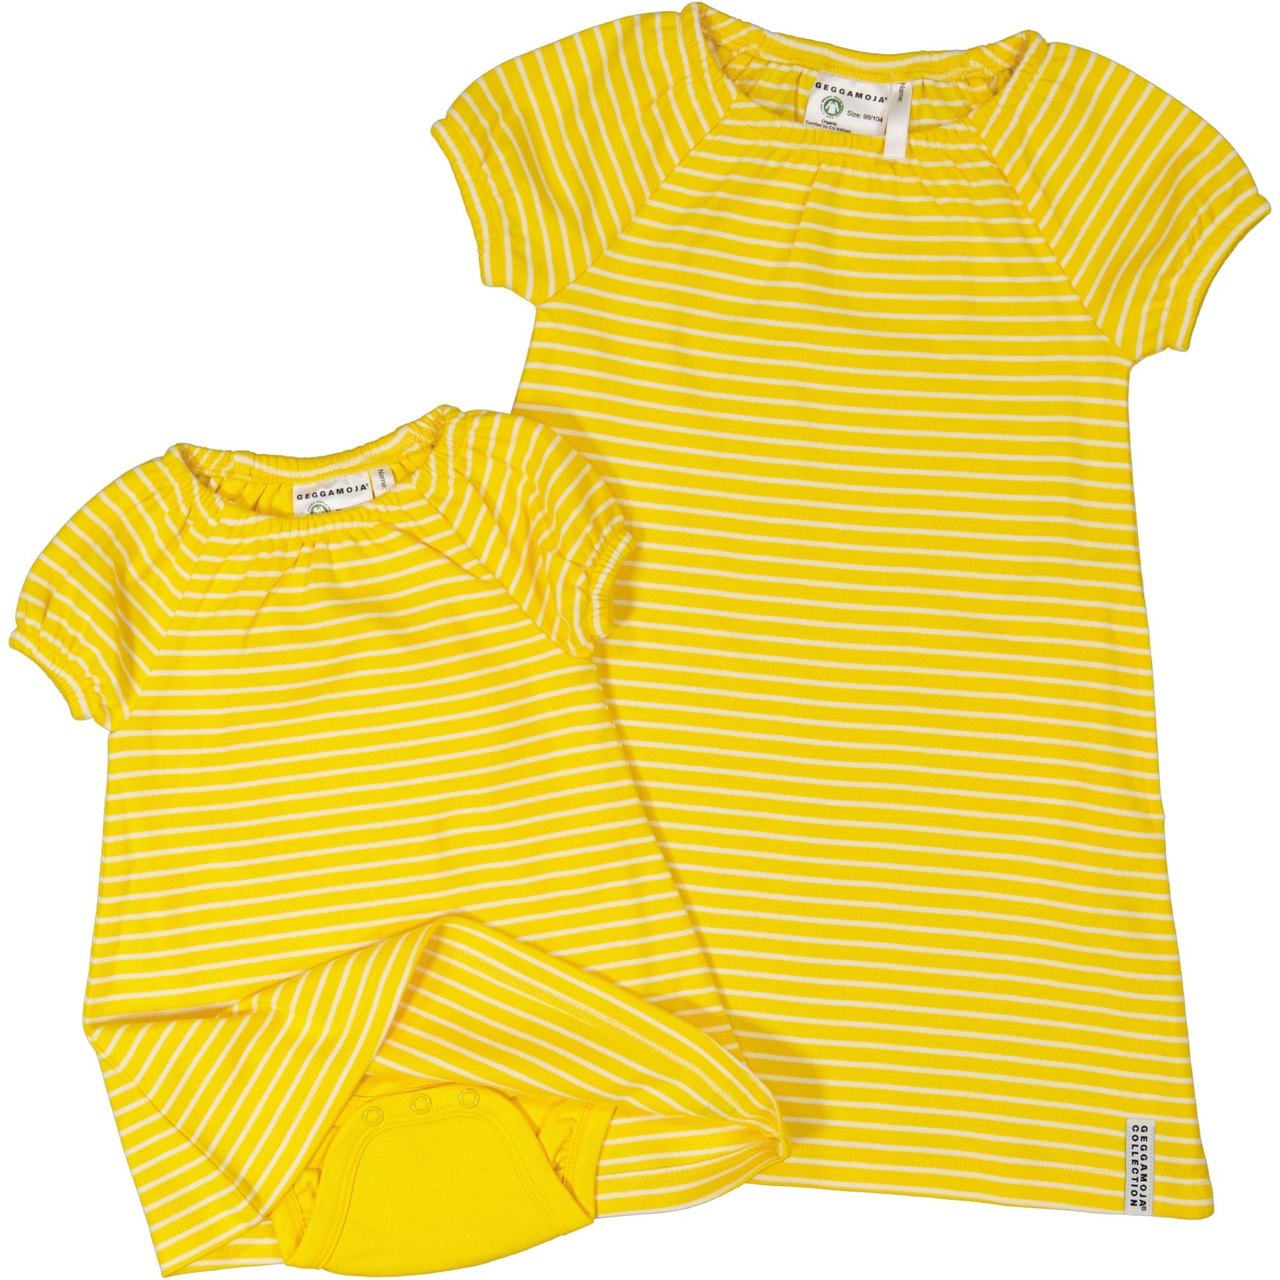 Singoalla dress Yellow/white  134/140